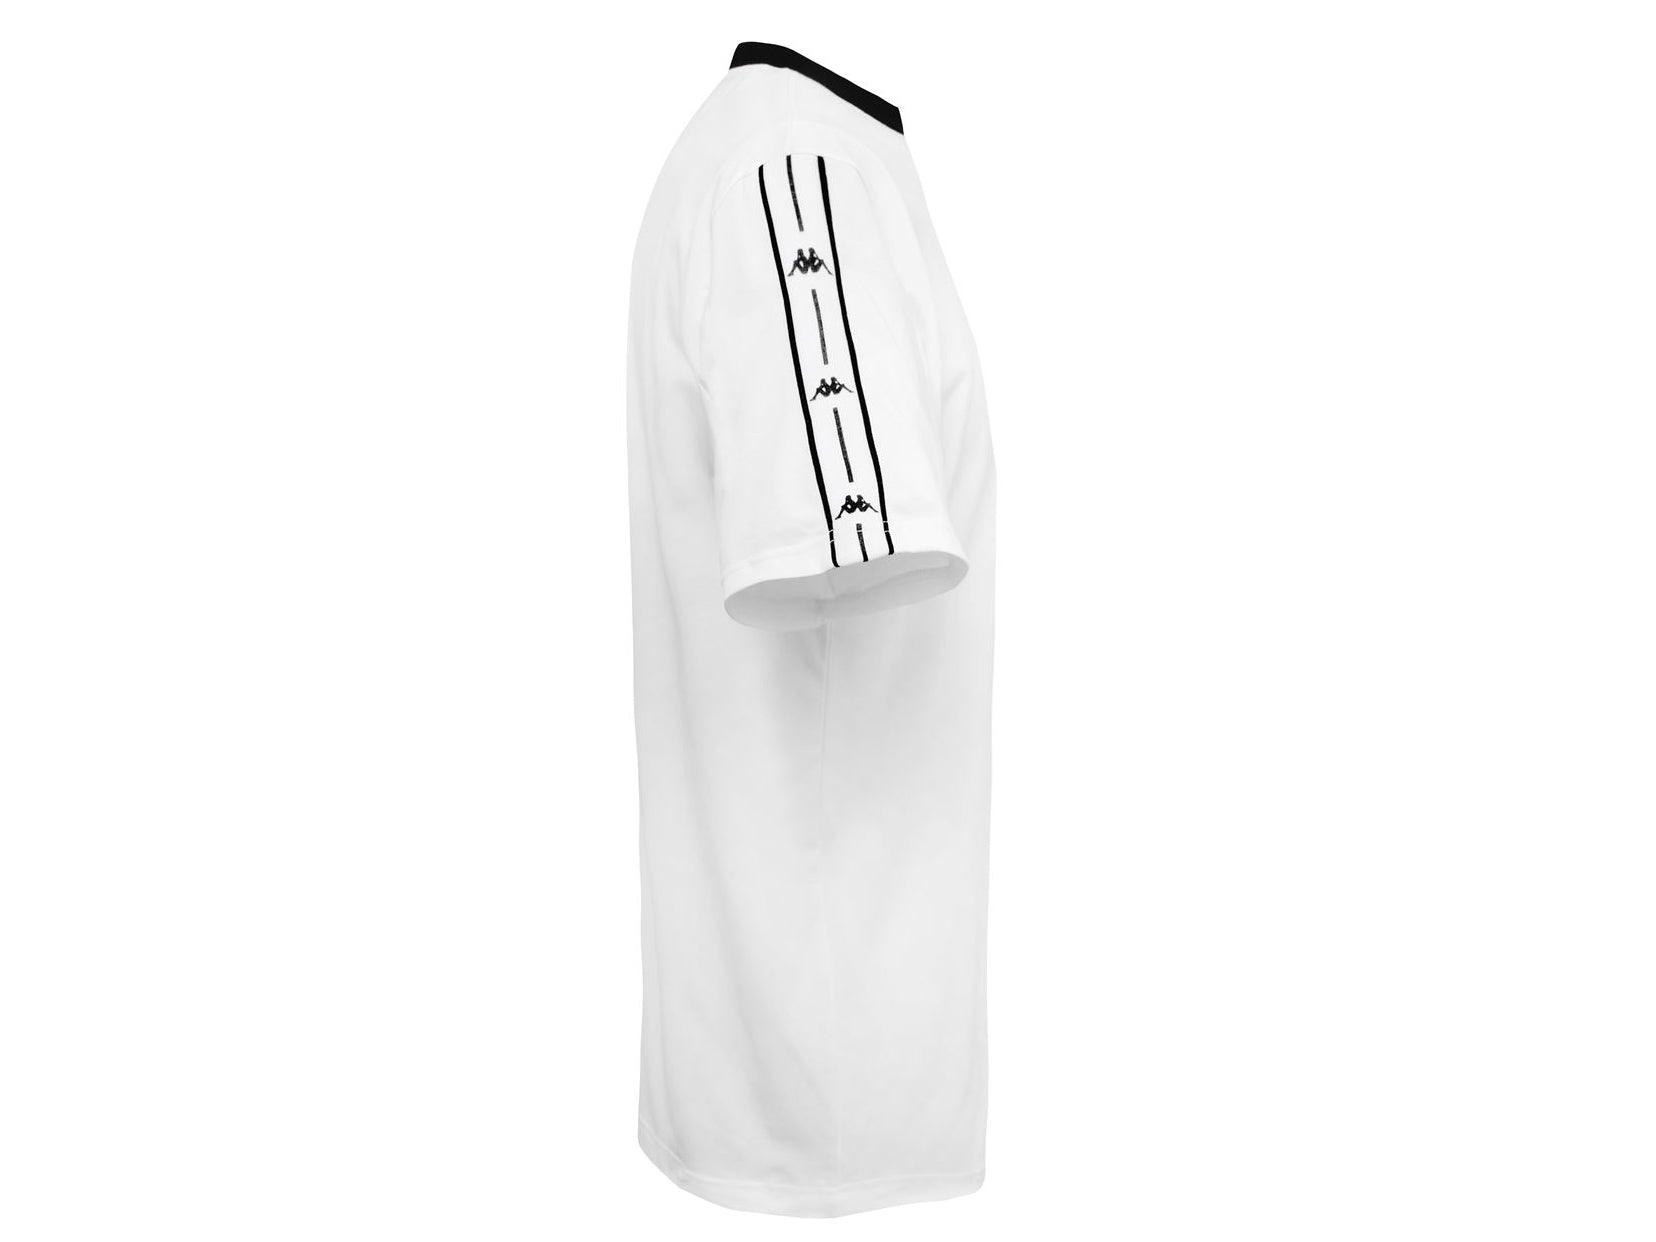 KAPPA Authentic JPN T-Shirt White Black 304ICN0 - Sandrini Calzature e Abbigliamento